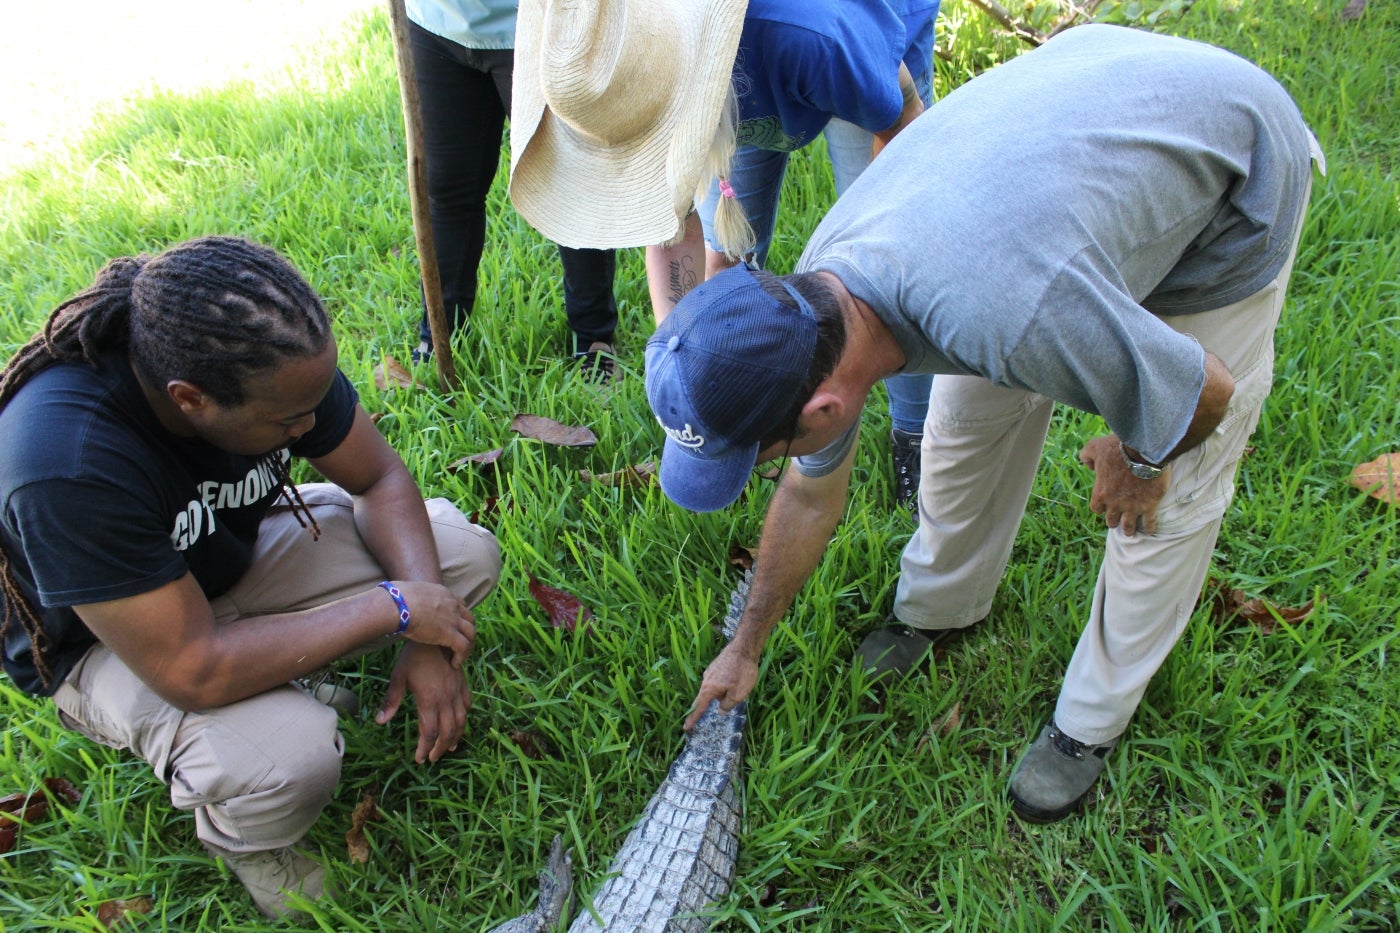 Kyle helps conduct a Cuban Crocodile health screening in Cuba